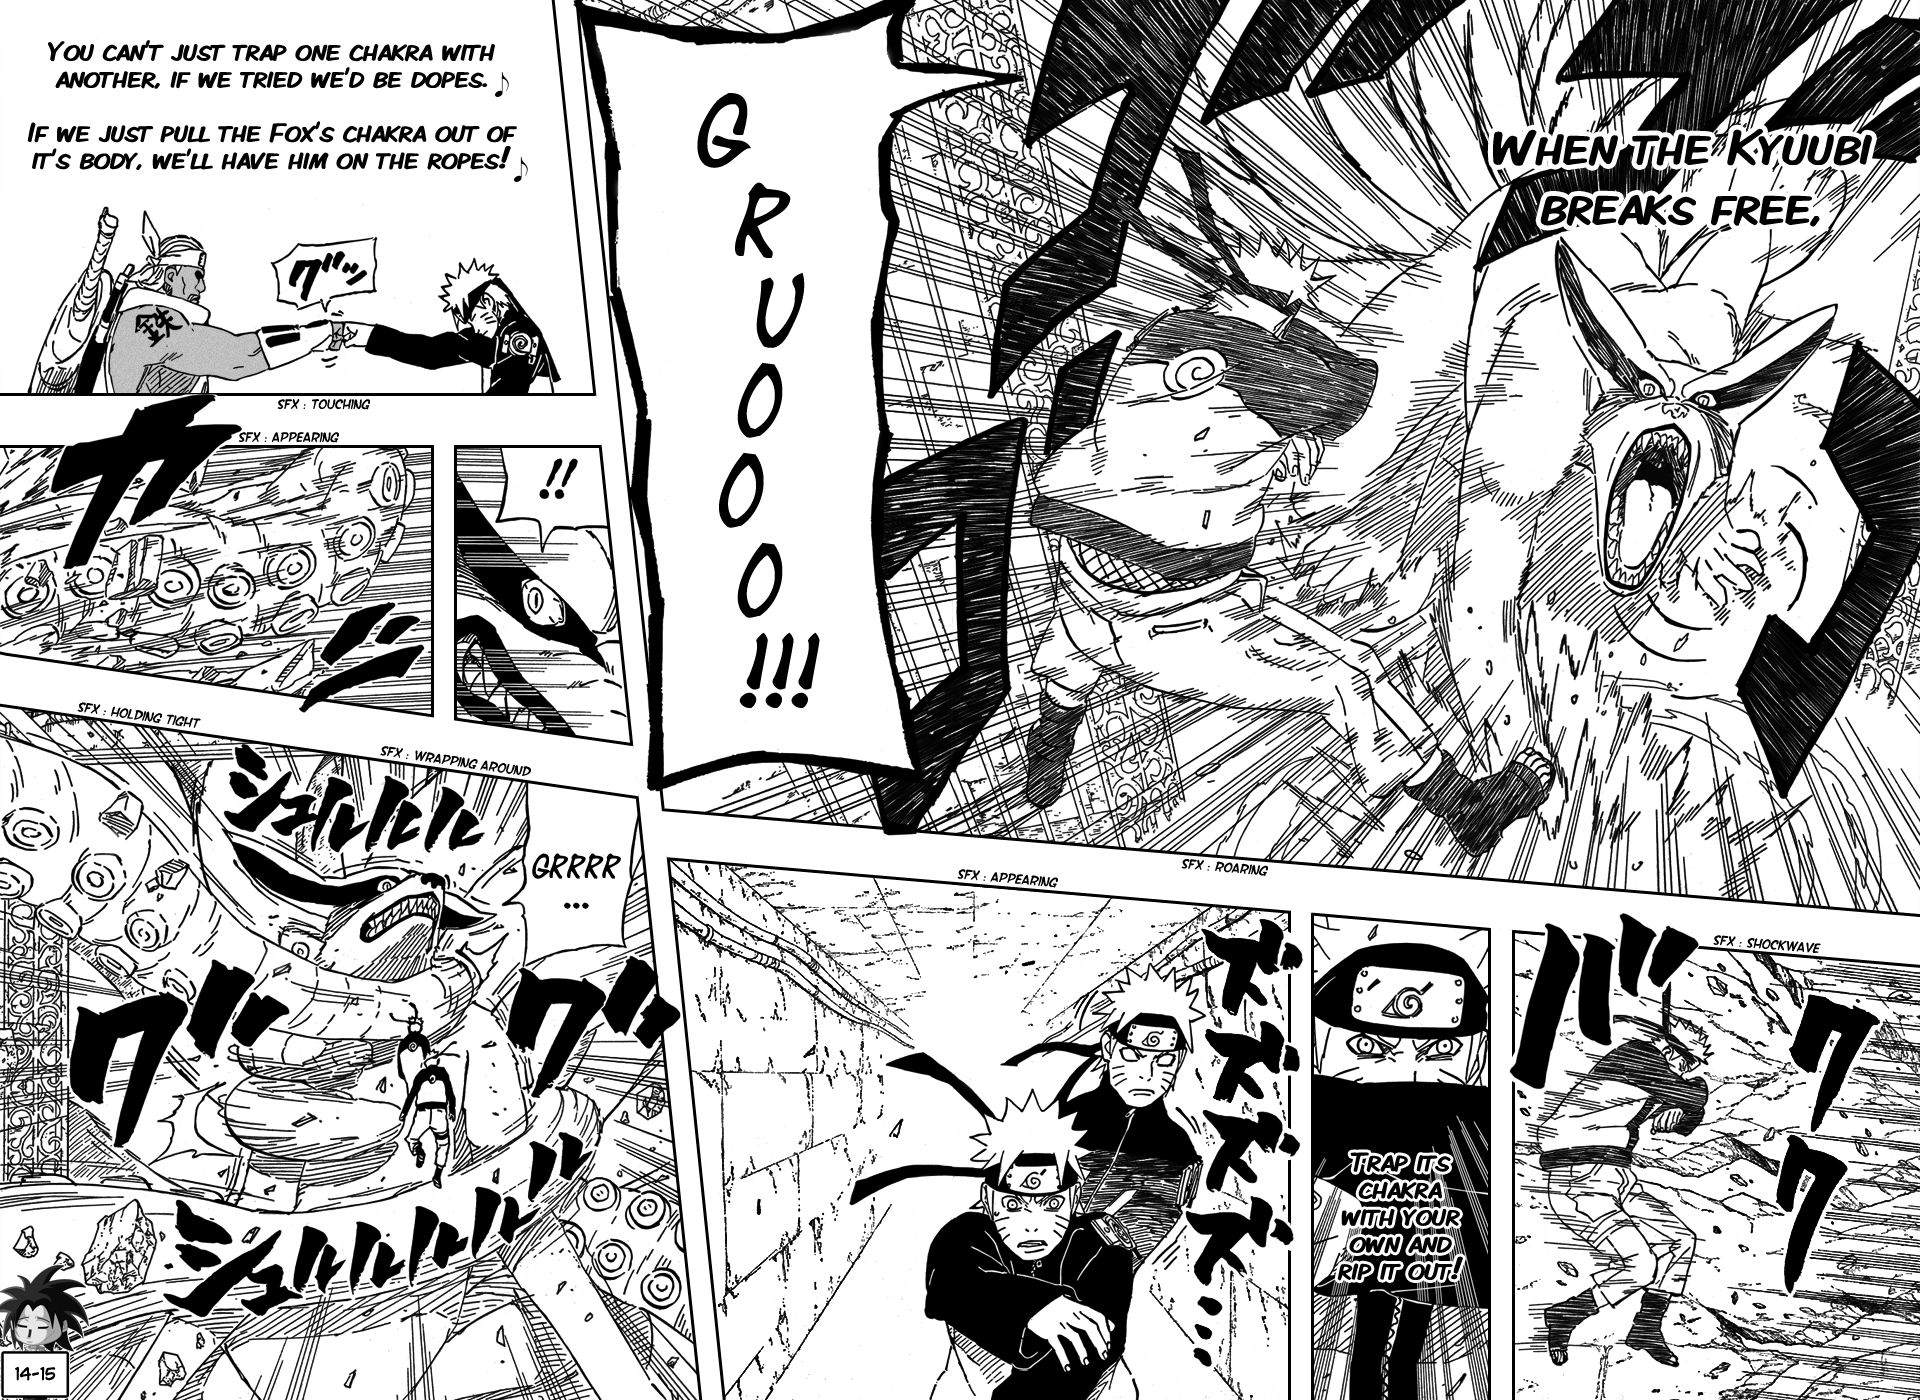 Naruto Shippuden, Vol.53 , Chapter 496 : Reunion With The Kyubi ...